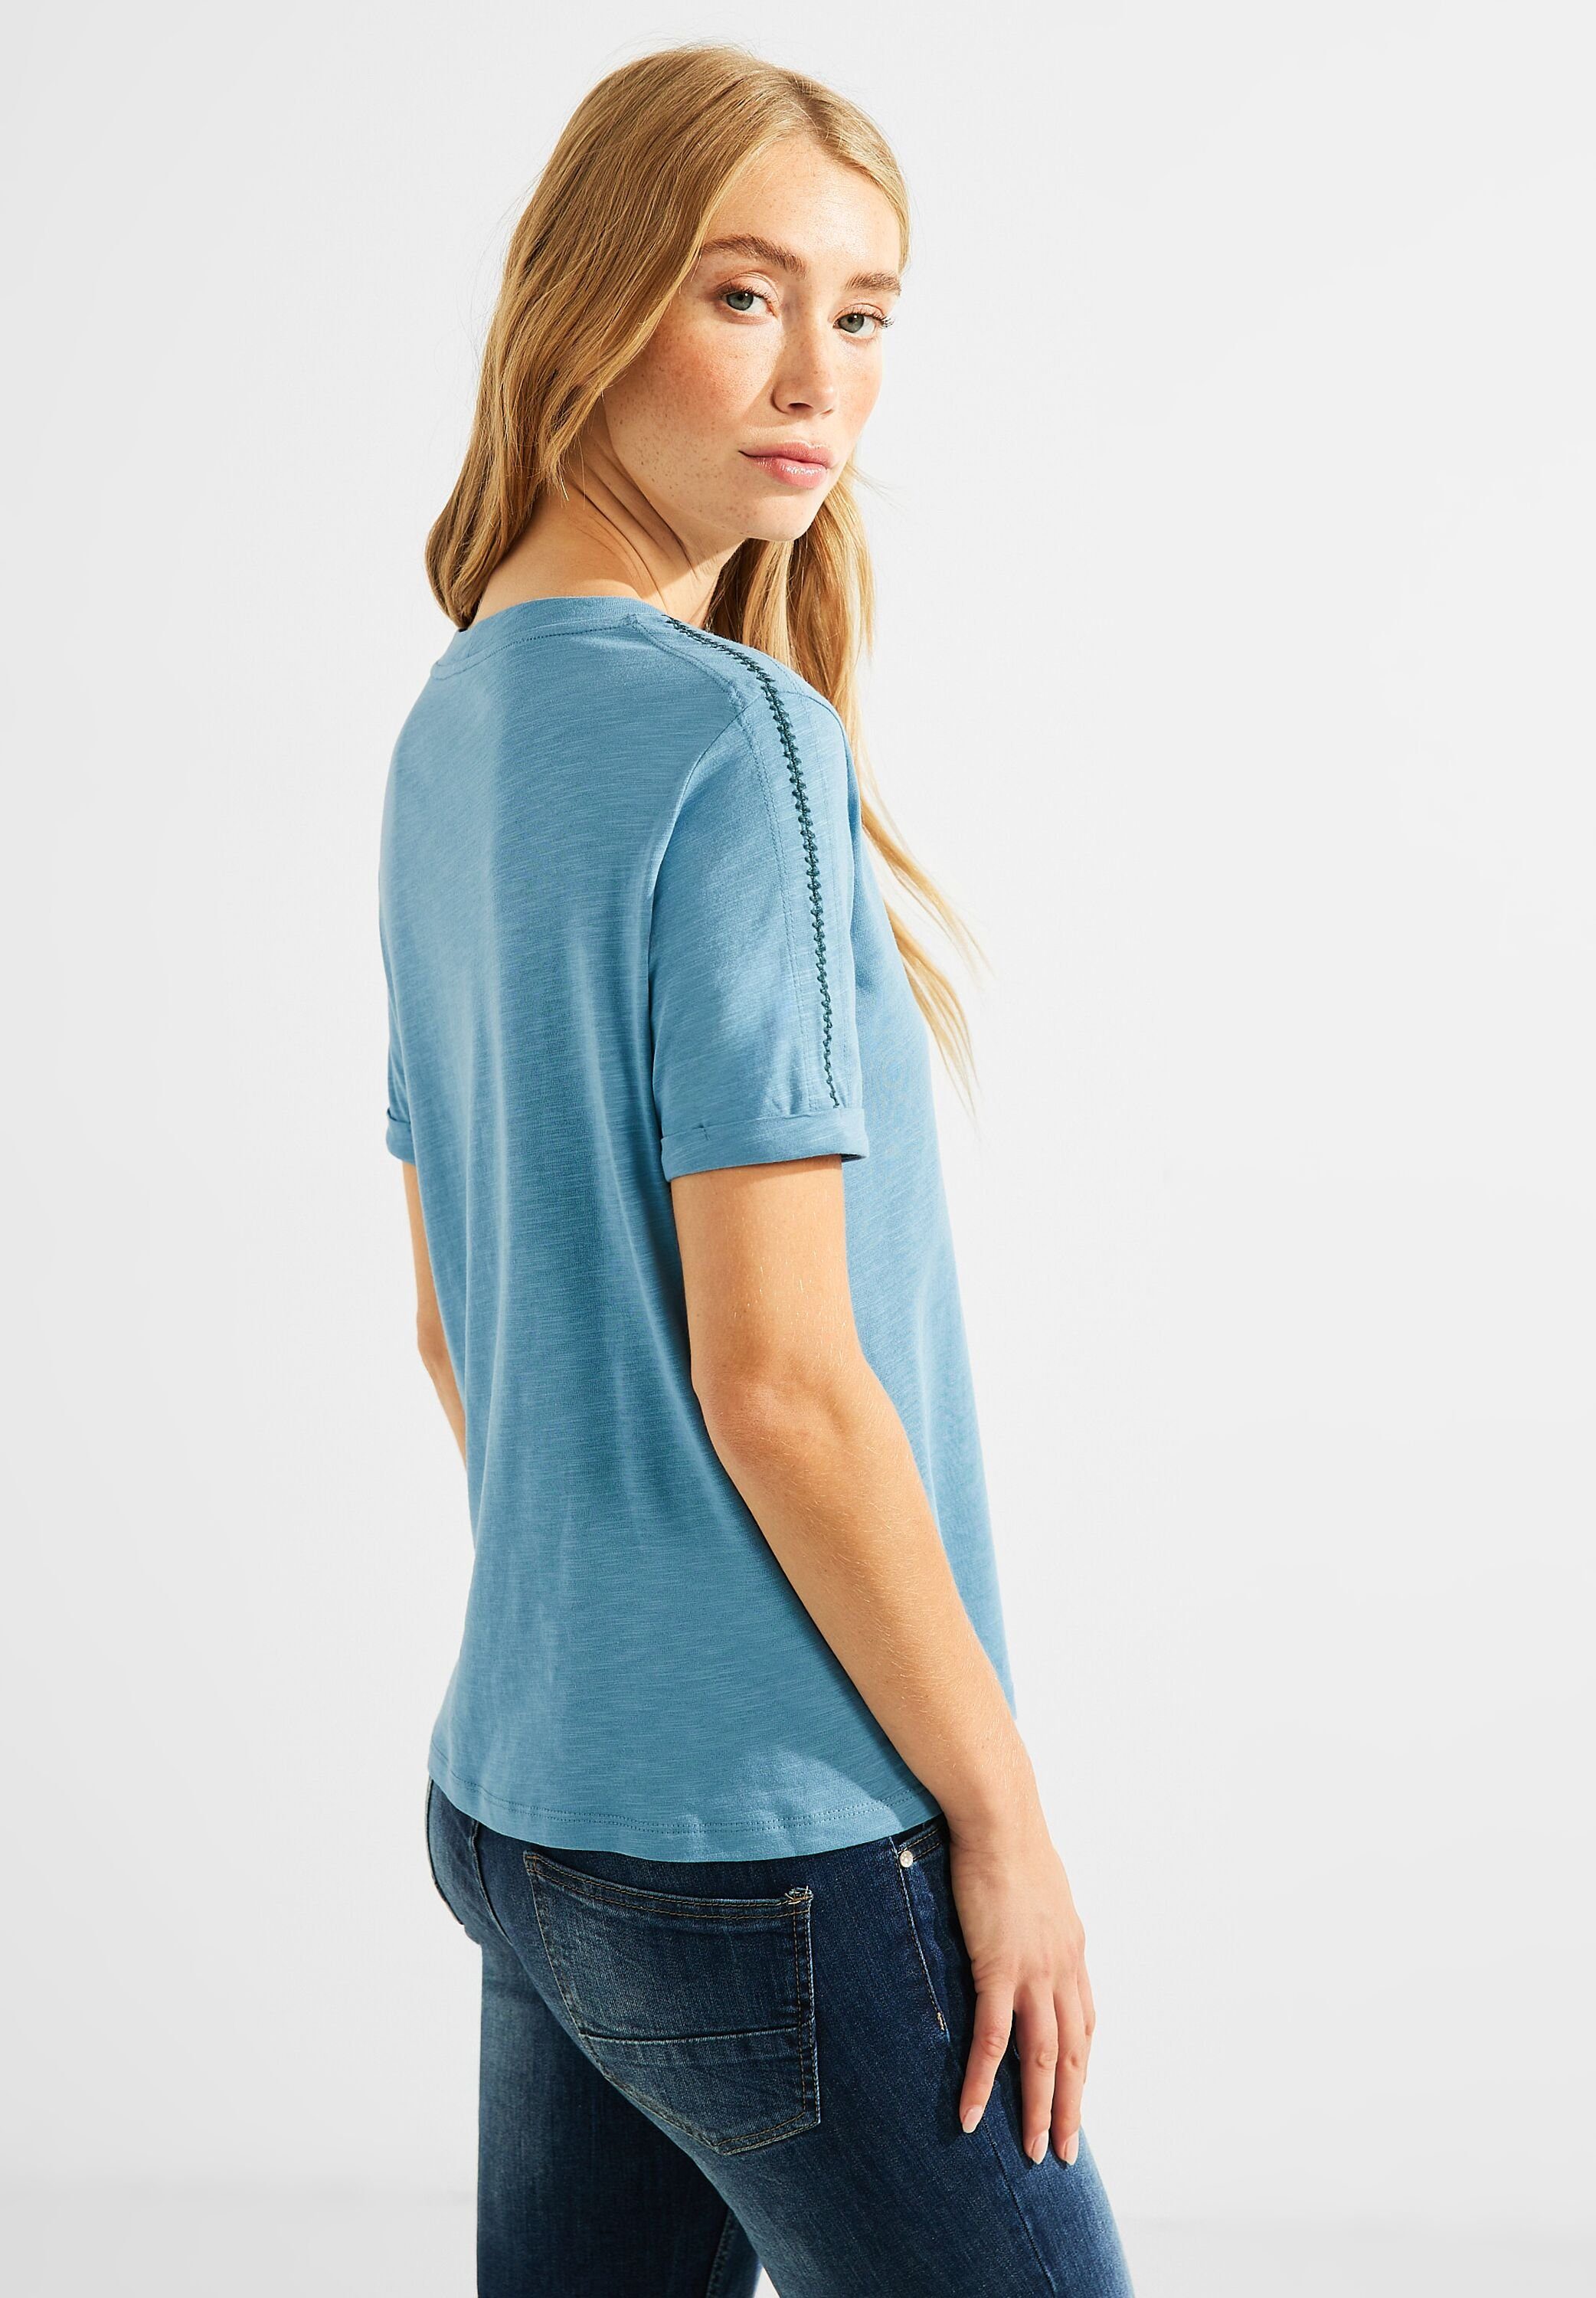 softem adriatic blue T-Shirt Cecil Materialmix aus